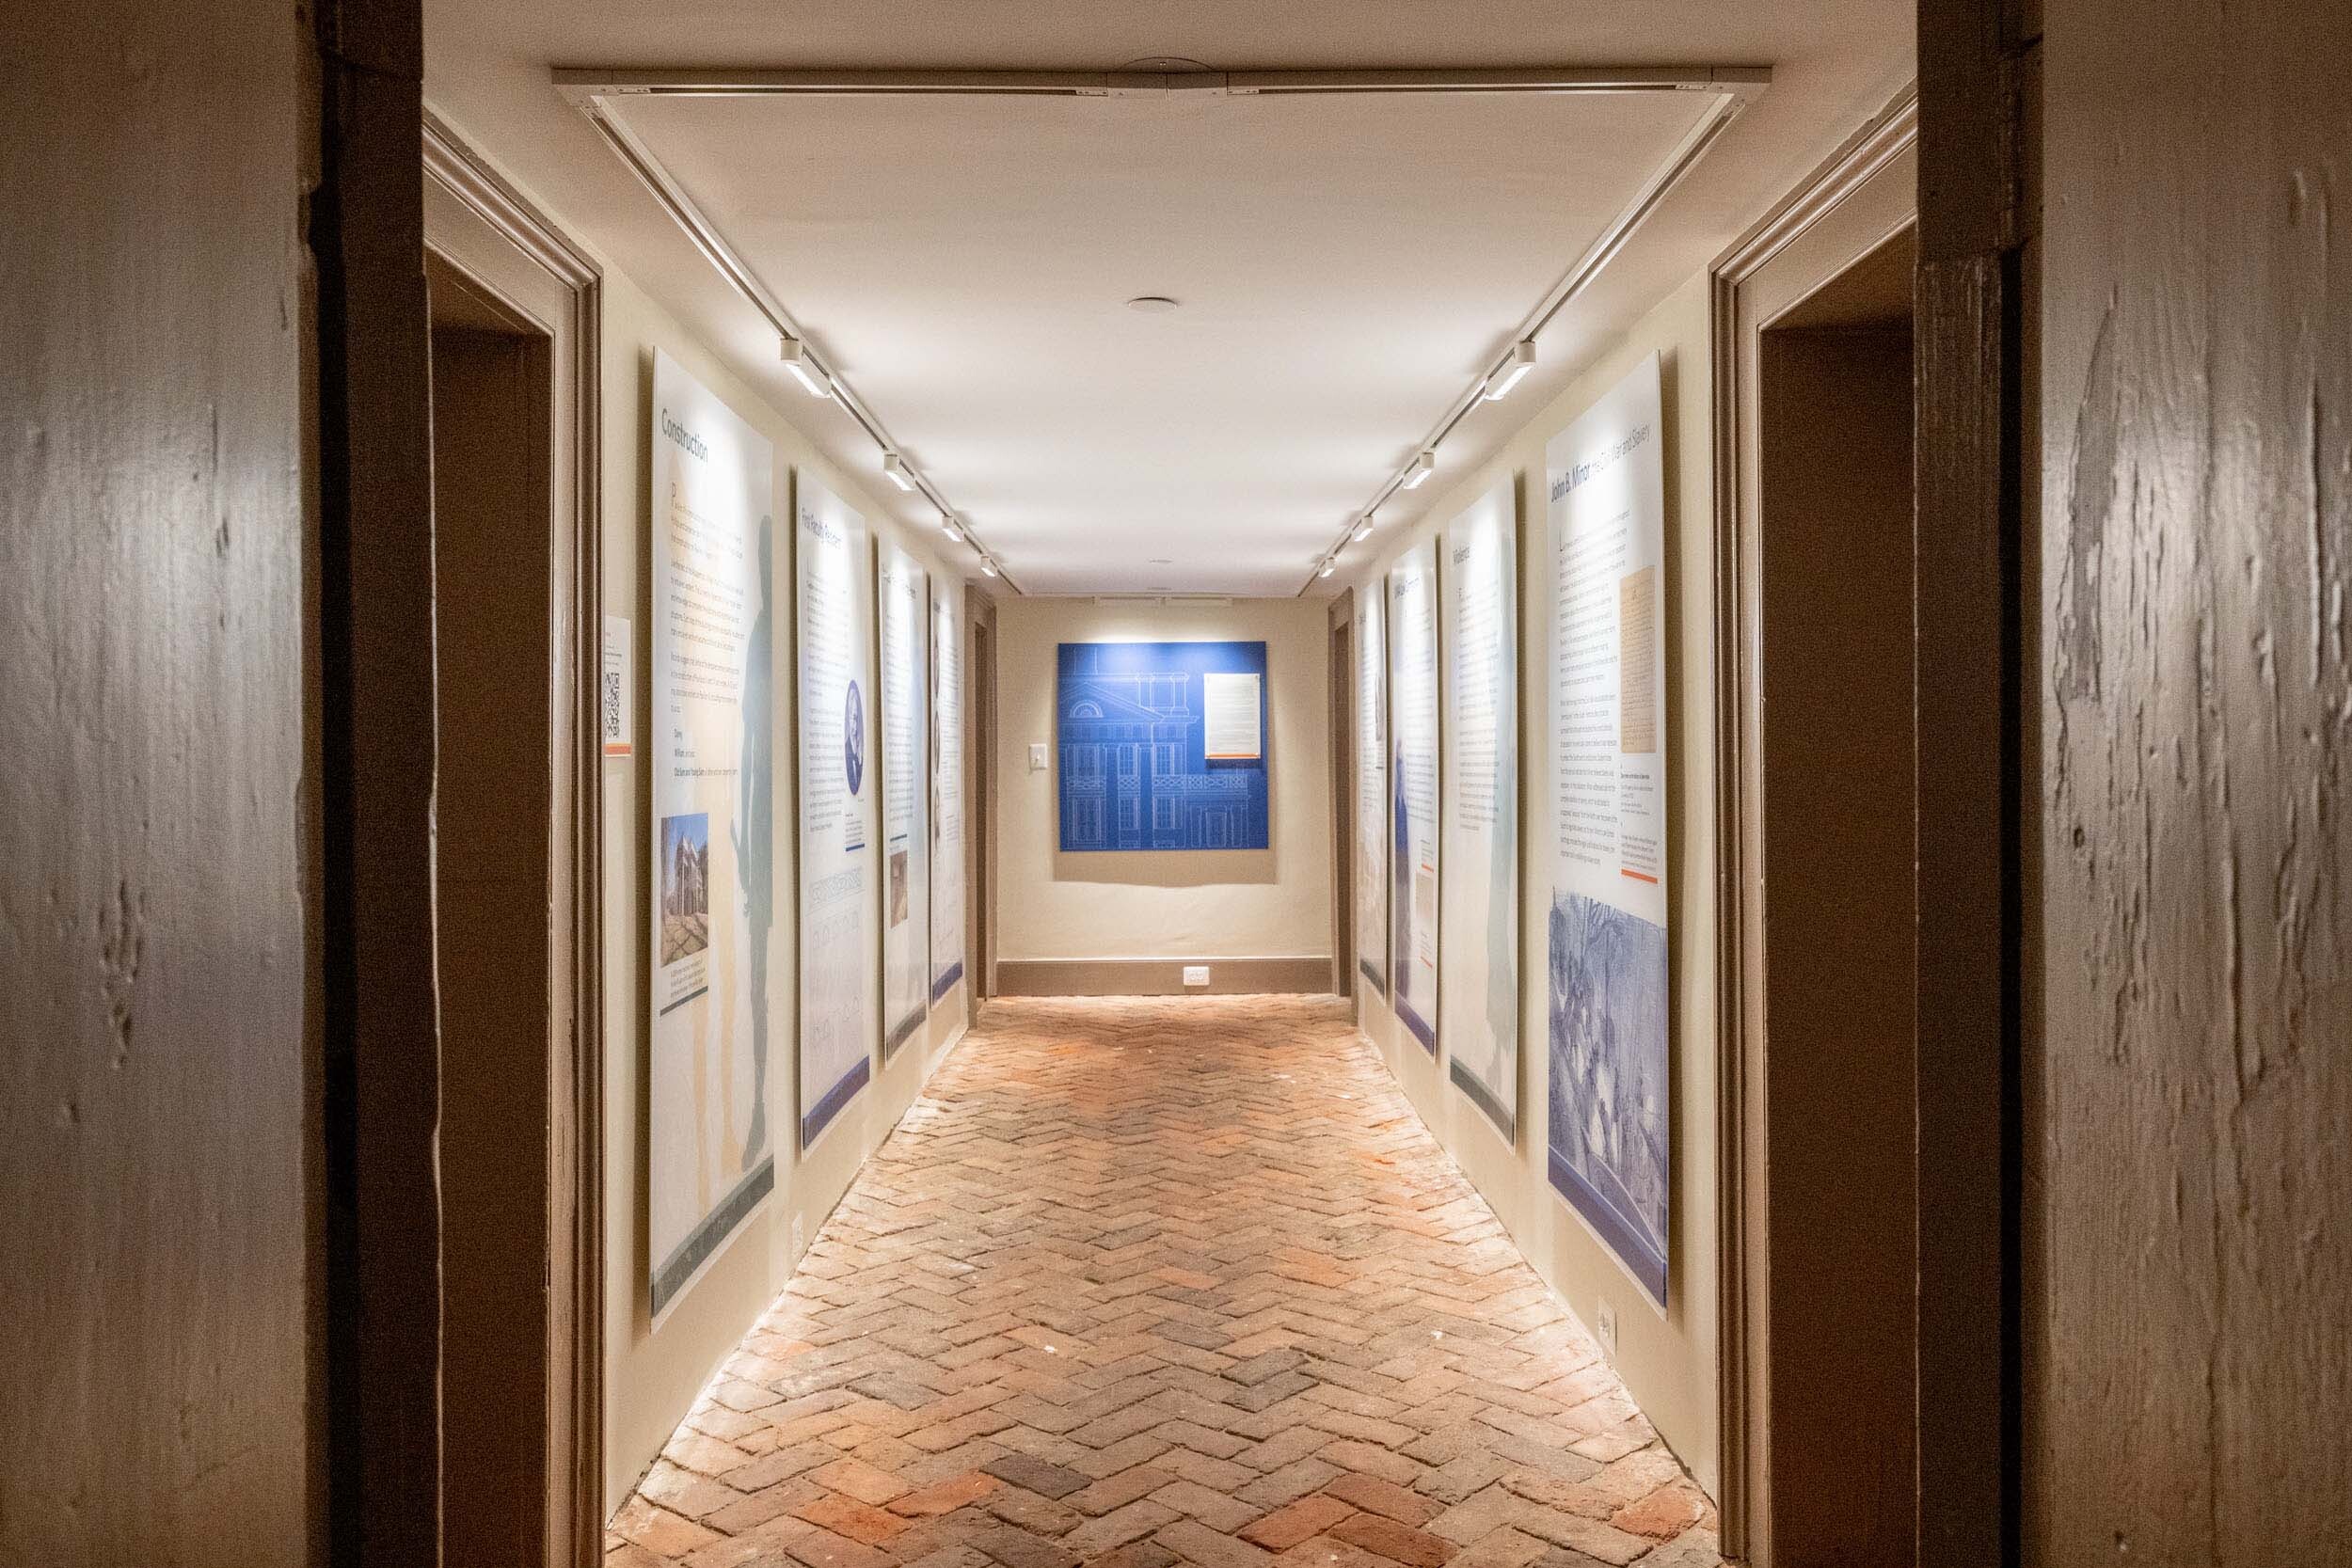 exhibit hallways in the pavilion